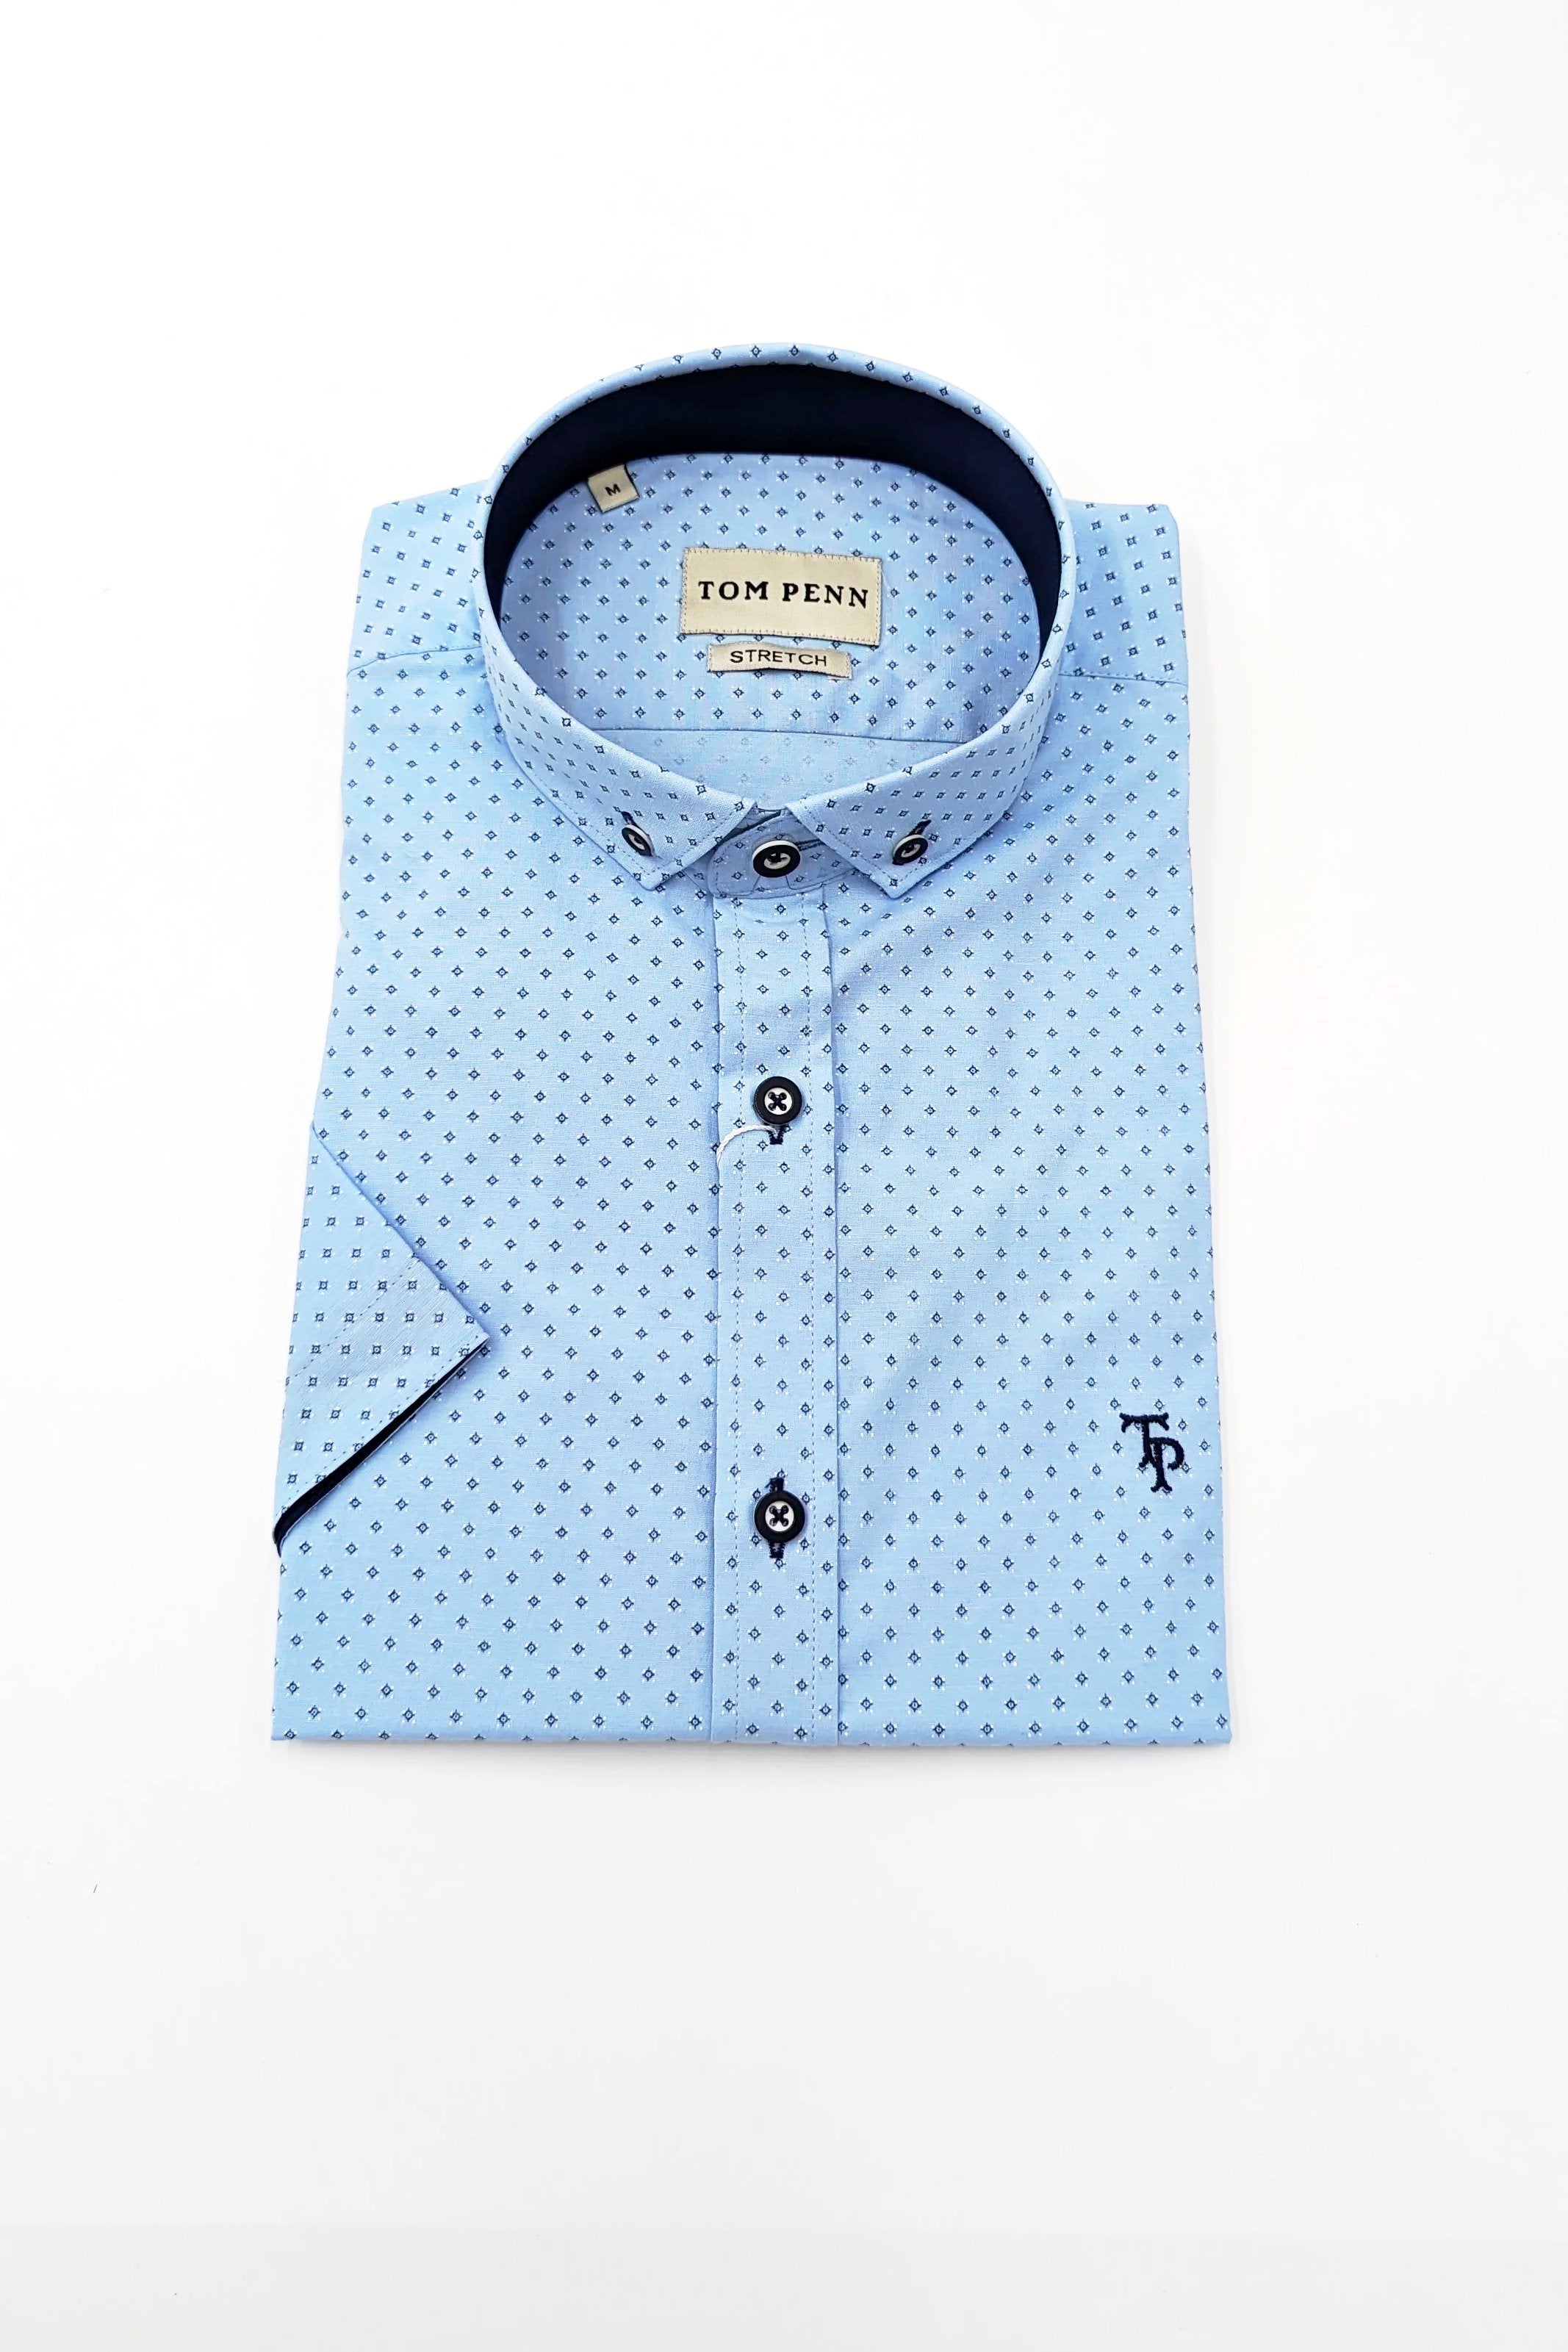 Tom Penn Short Sleeve Blue Dimond Pattern Mens Shirt